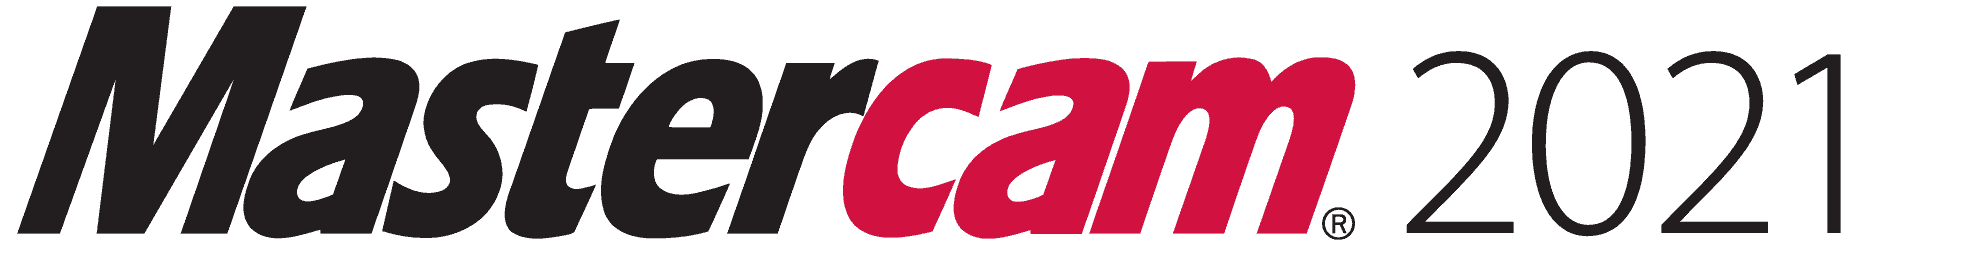 Mastercam 2021 Logo